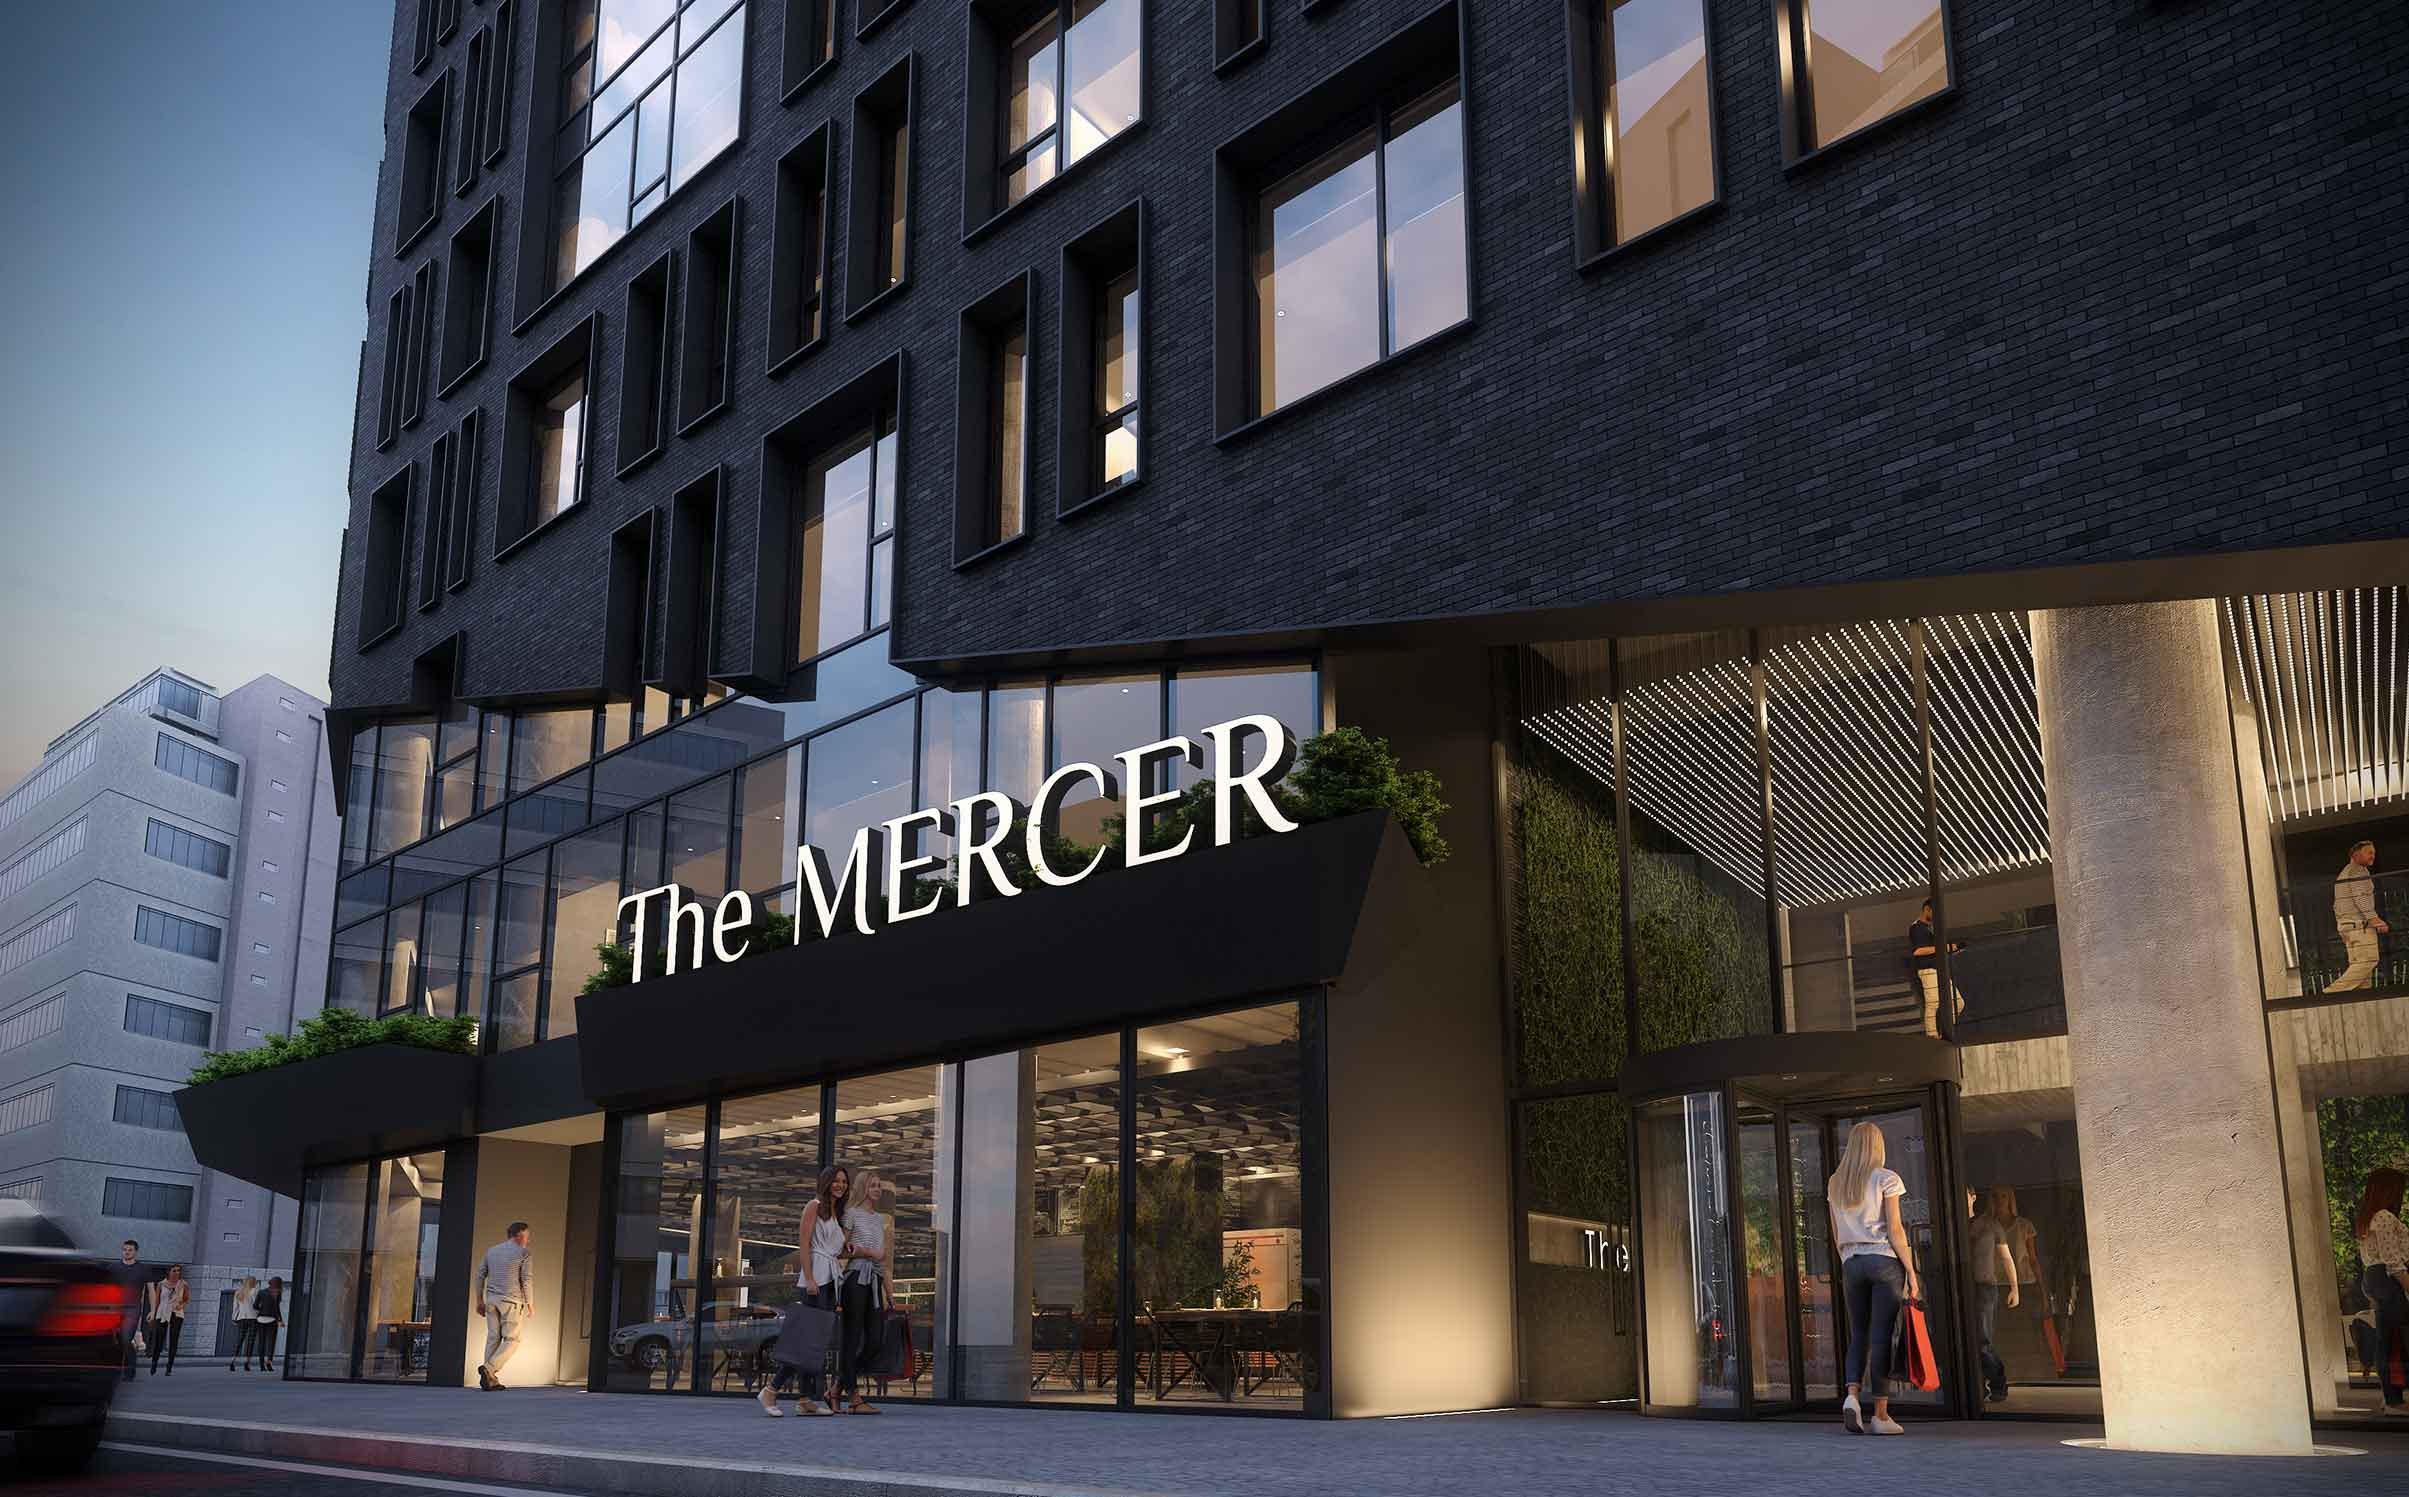 The Mercer - İzmir